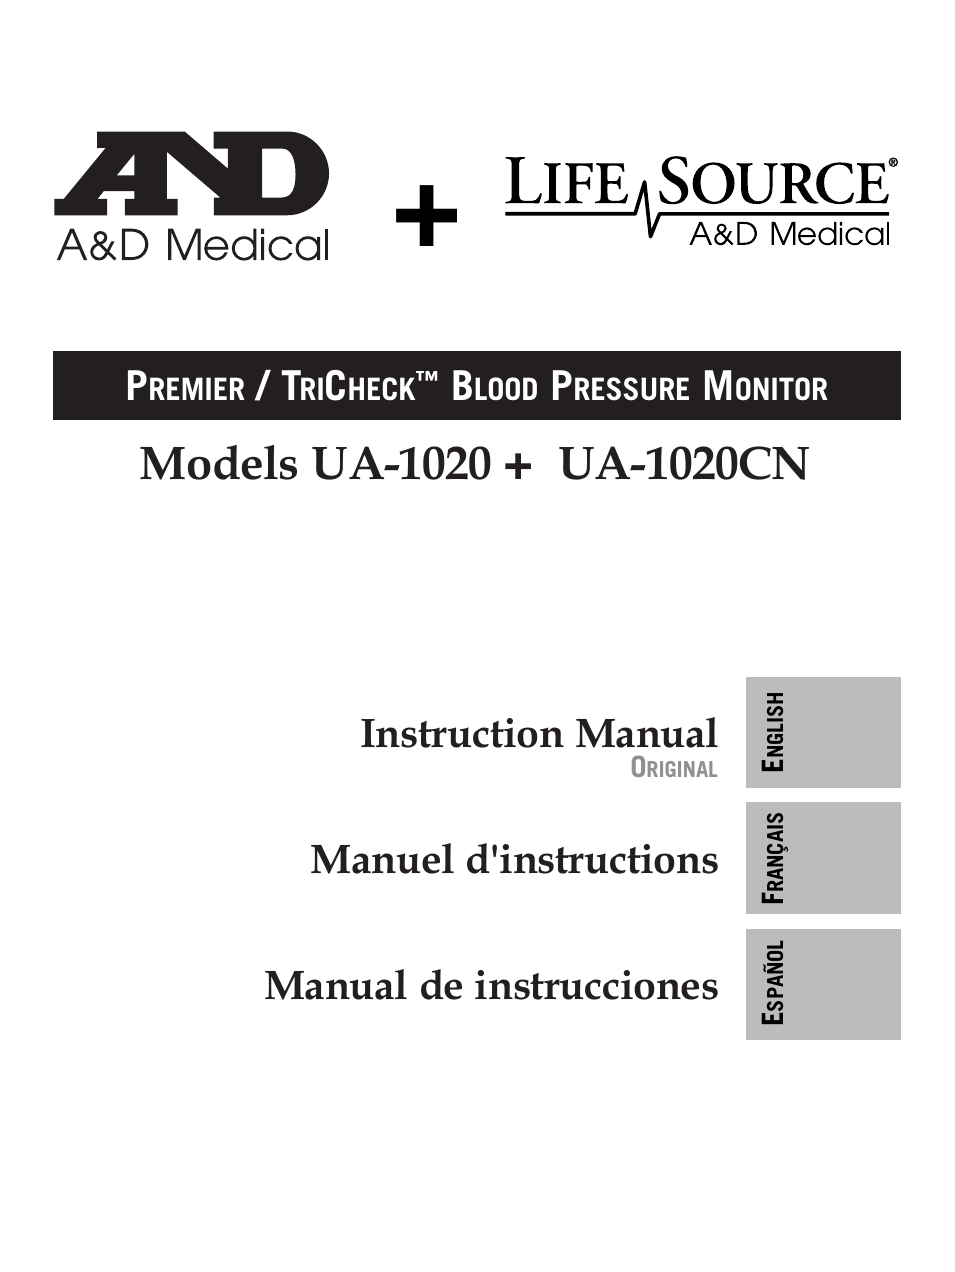 Premier/TriCheck Blood Pressure MOnitor UA-1020CN